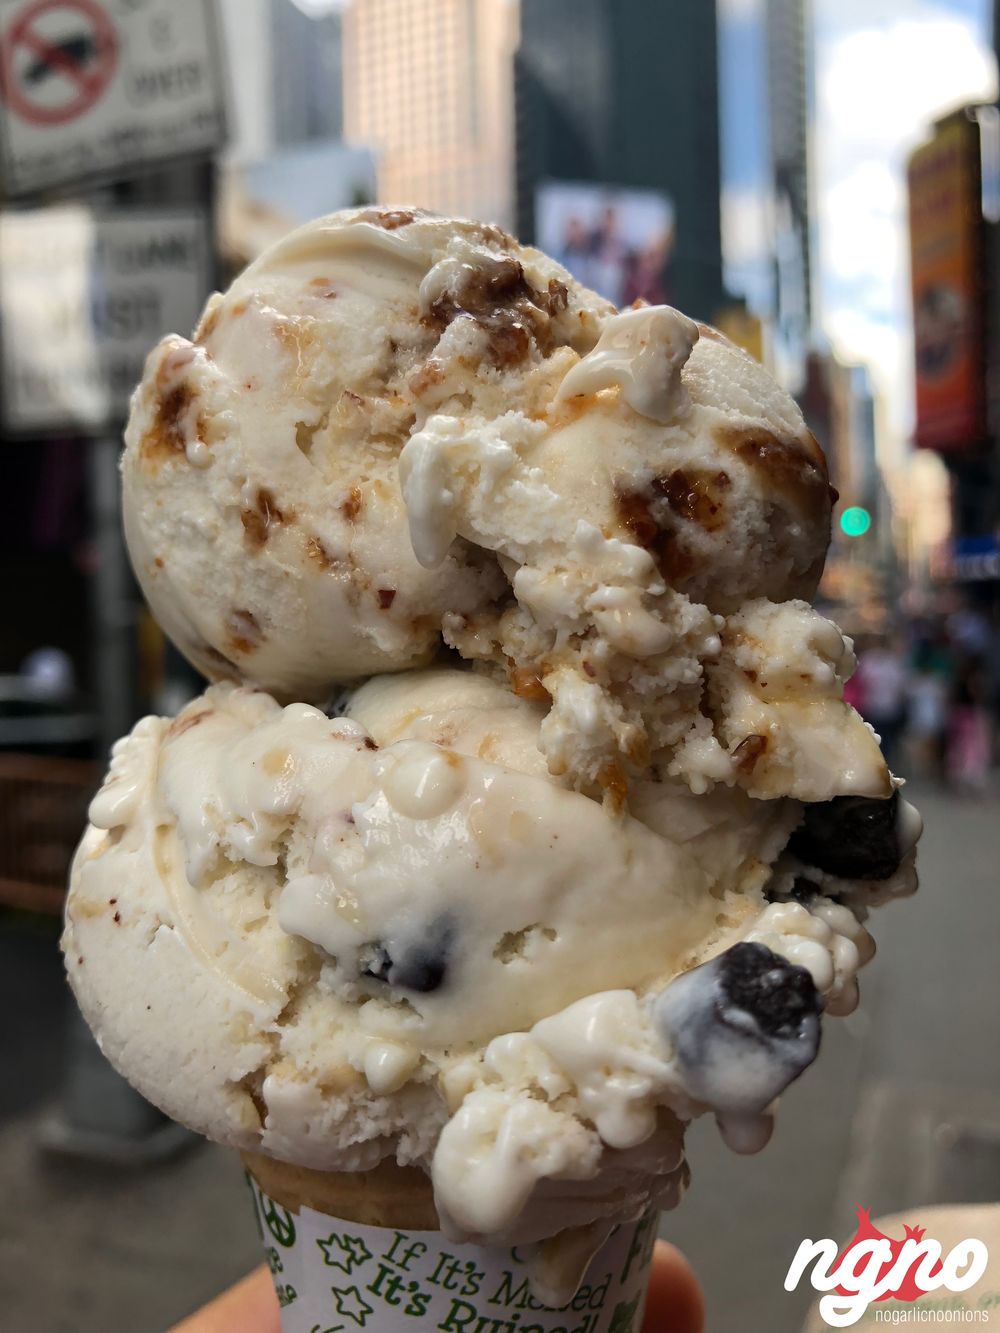 ice-cream-new-york-nogarlicnoonions-532018-08-05-05-56-15